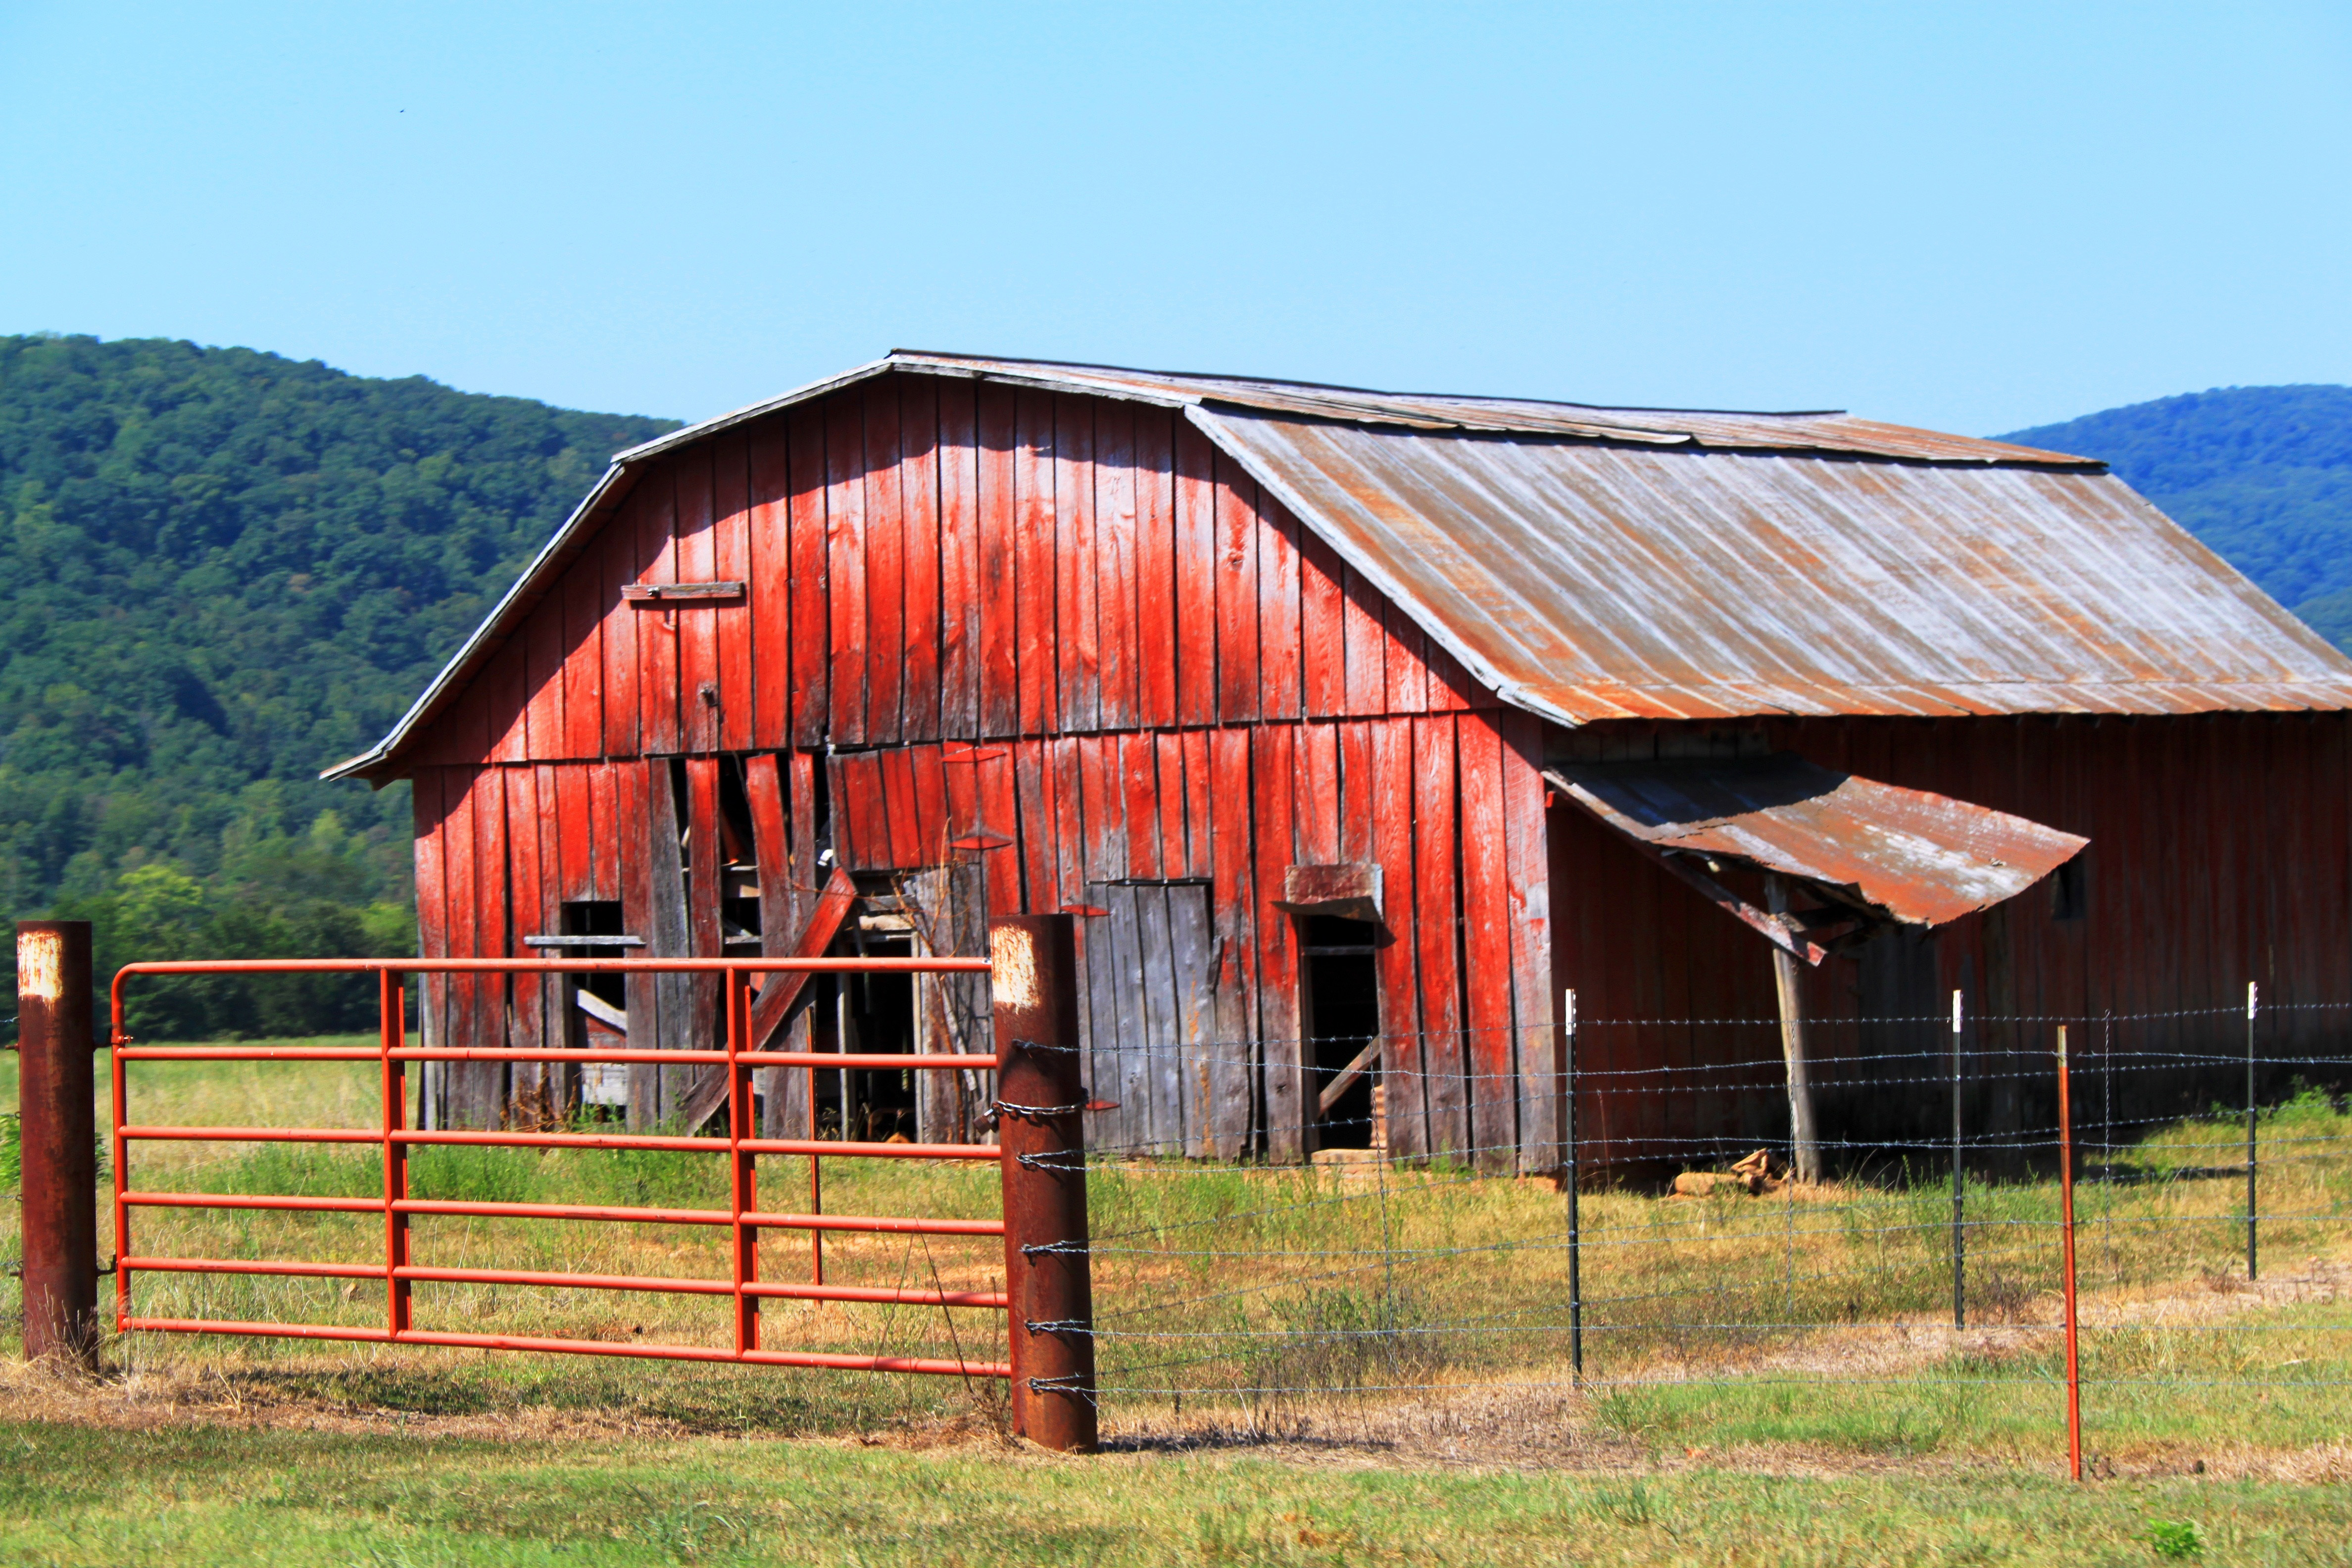 Faded Old Barn in Arkansas image - Free stock photo - Public Domain ...